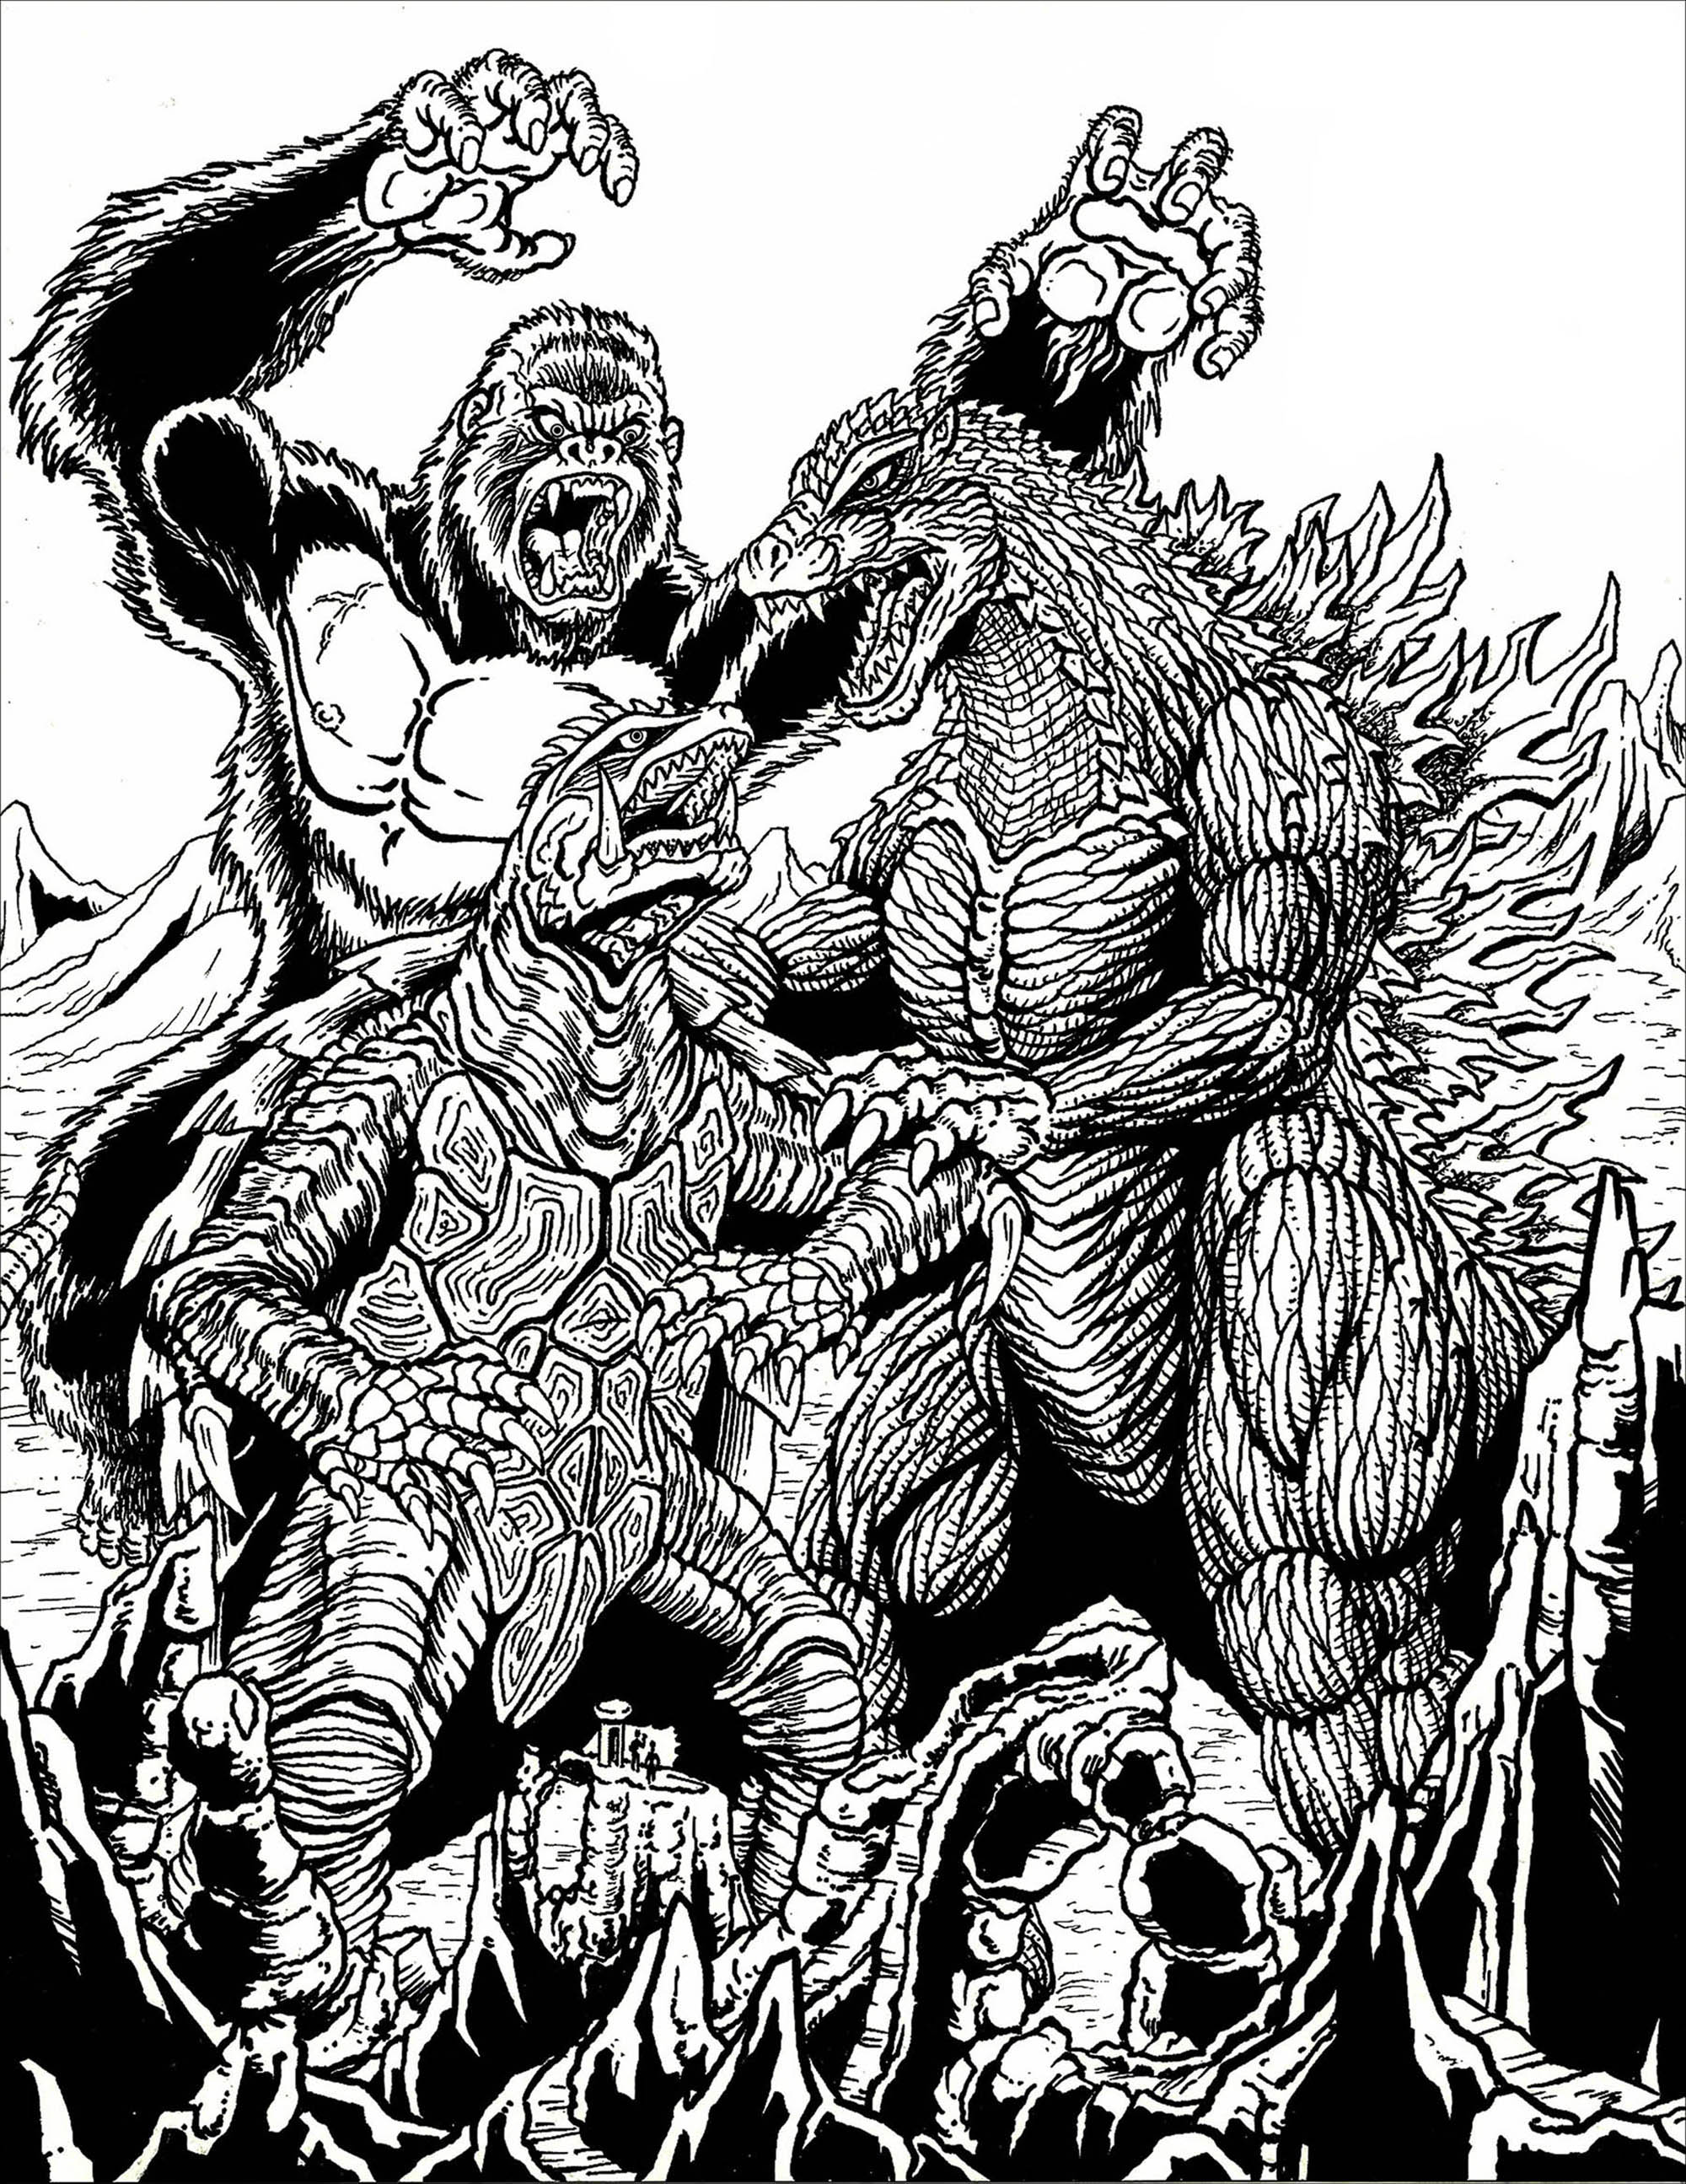 Kong vs Gamera vs Godzilla - Myths & legends Adult Coloring Pages